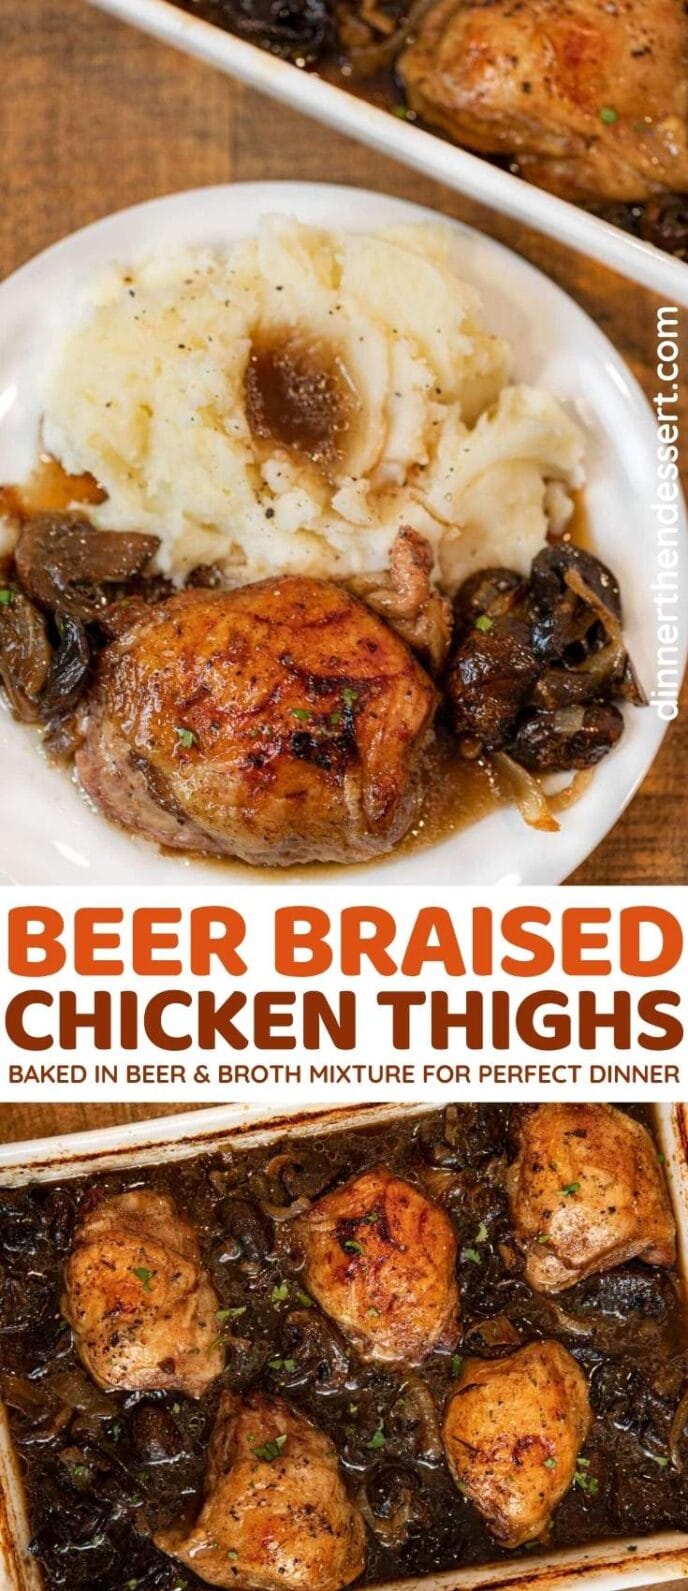 Beer Braised Chicken Thighs collage